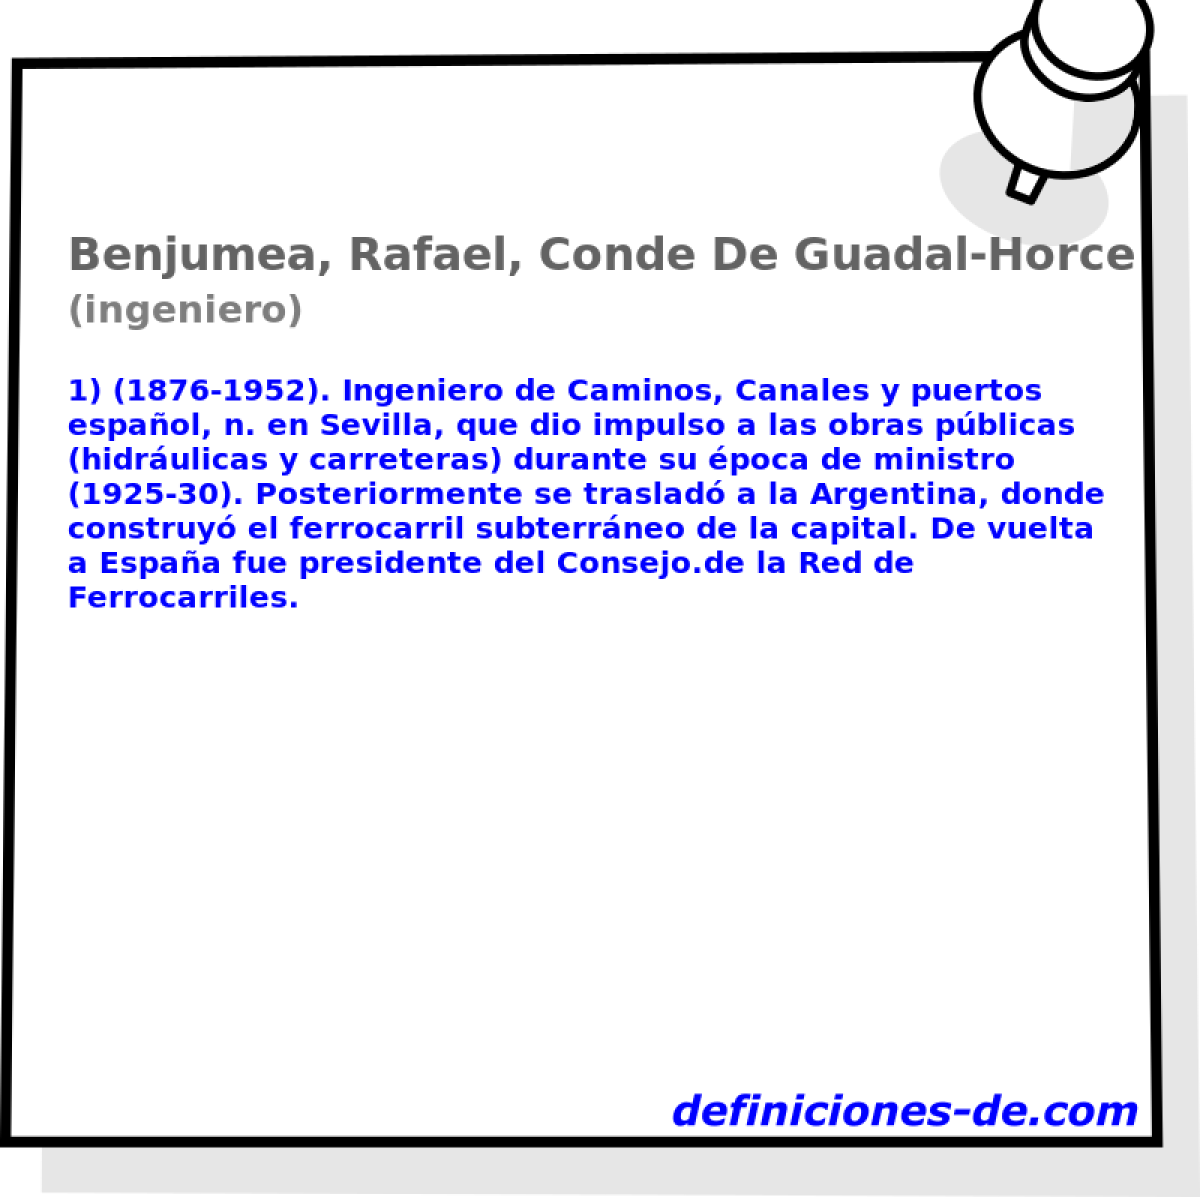 Benjumea, Rafael, Conde De Guadal-Horce (ingeniero)